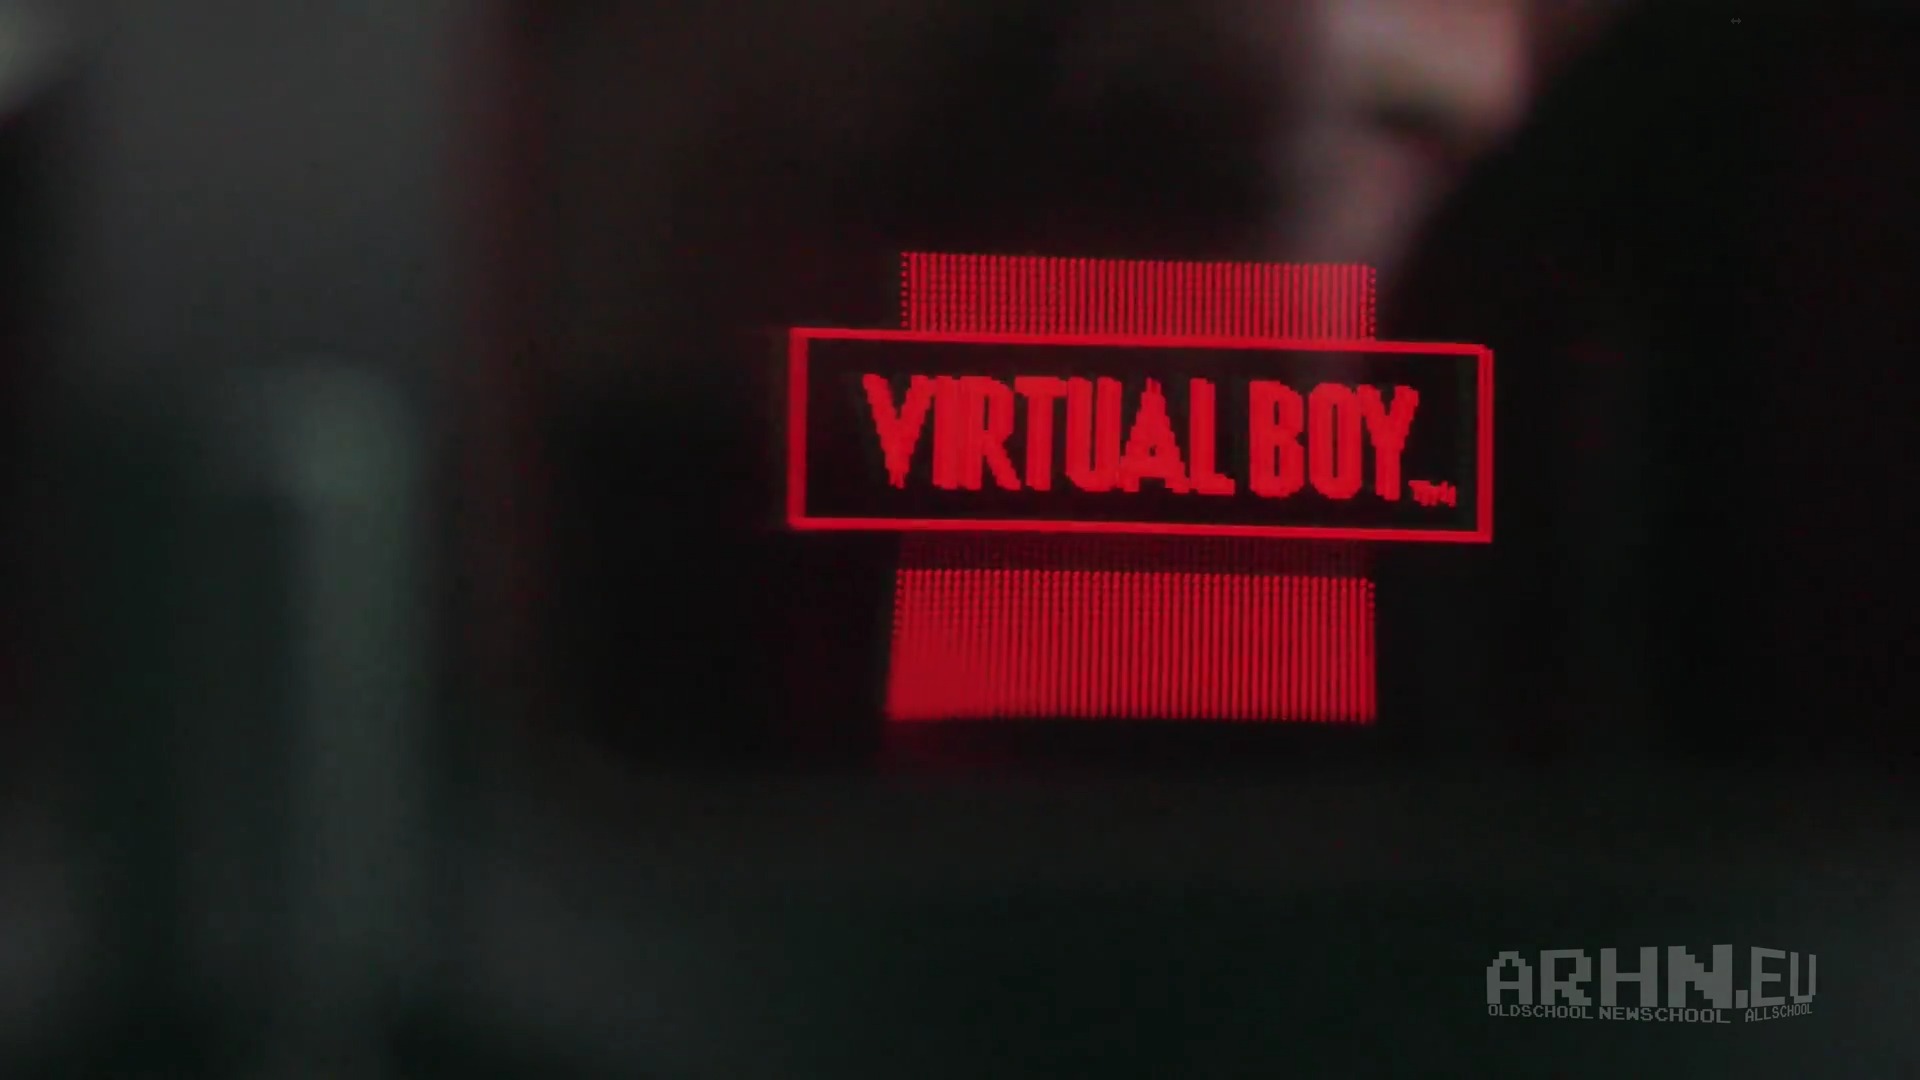 Ekran Virtual Boya